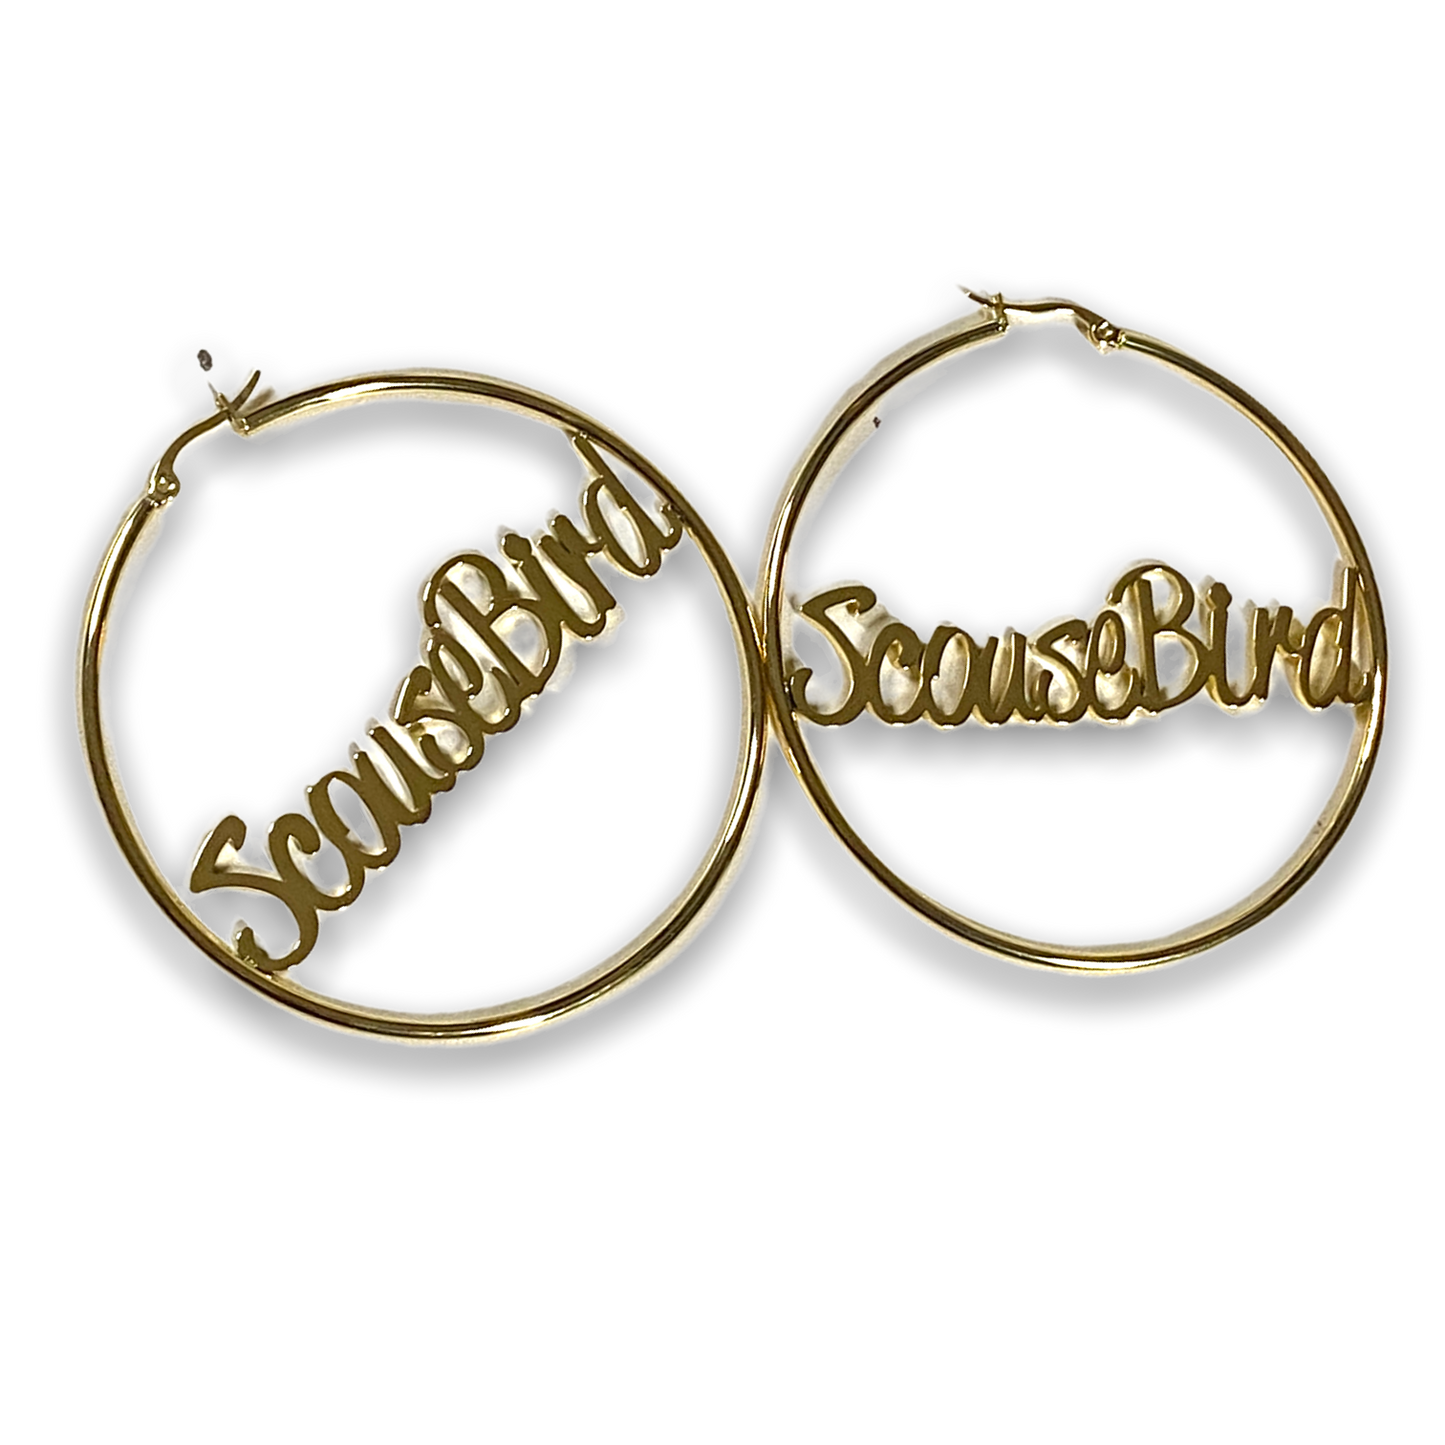 Scouse Bird - Hoop Earrings